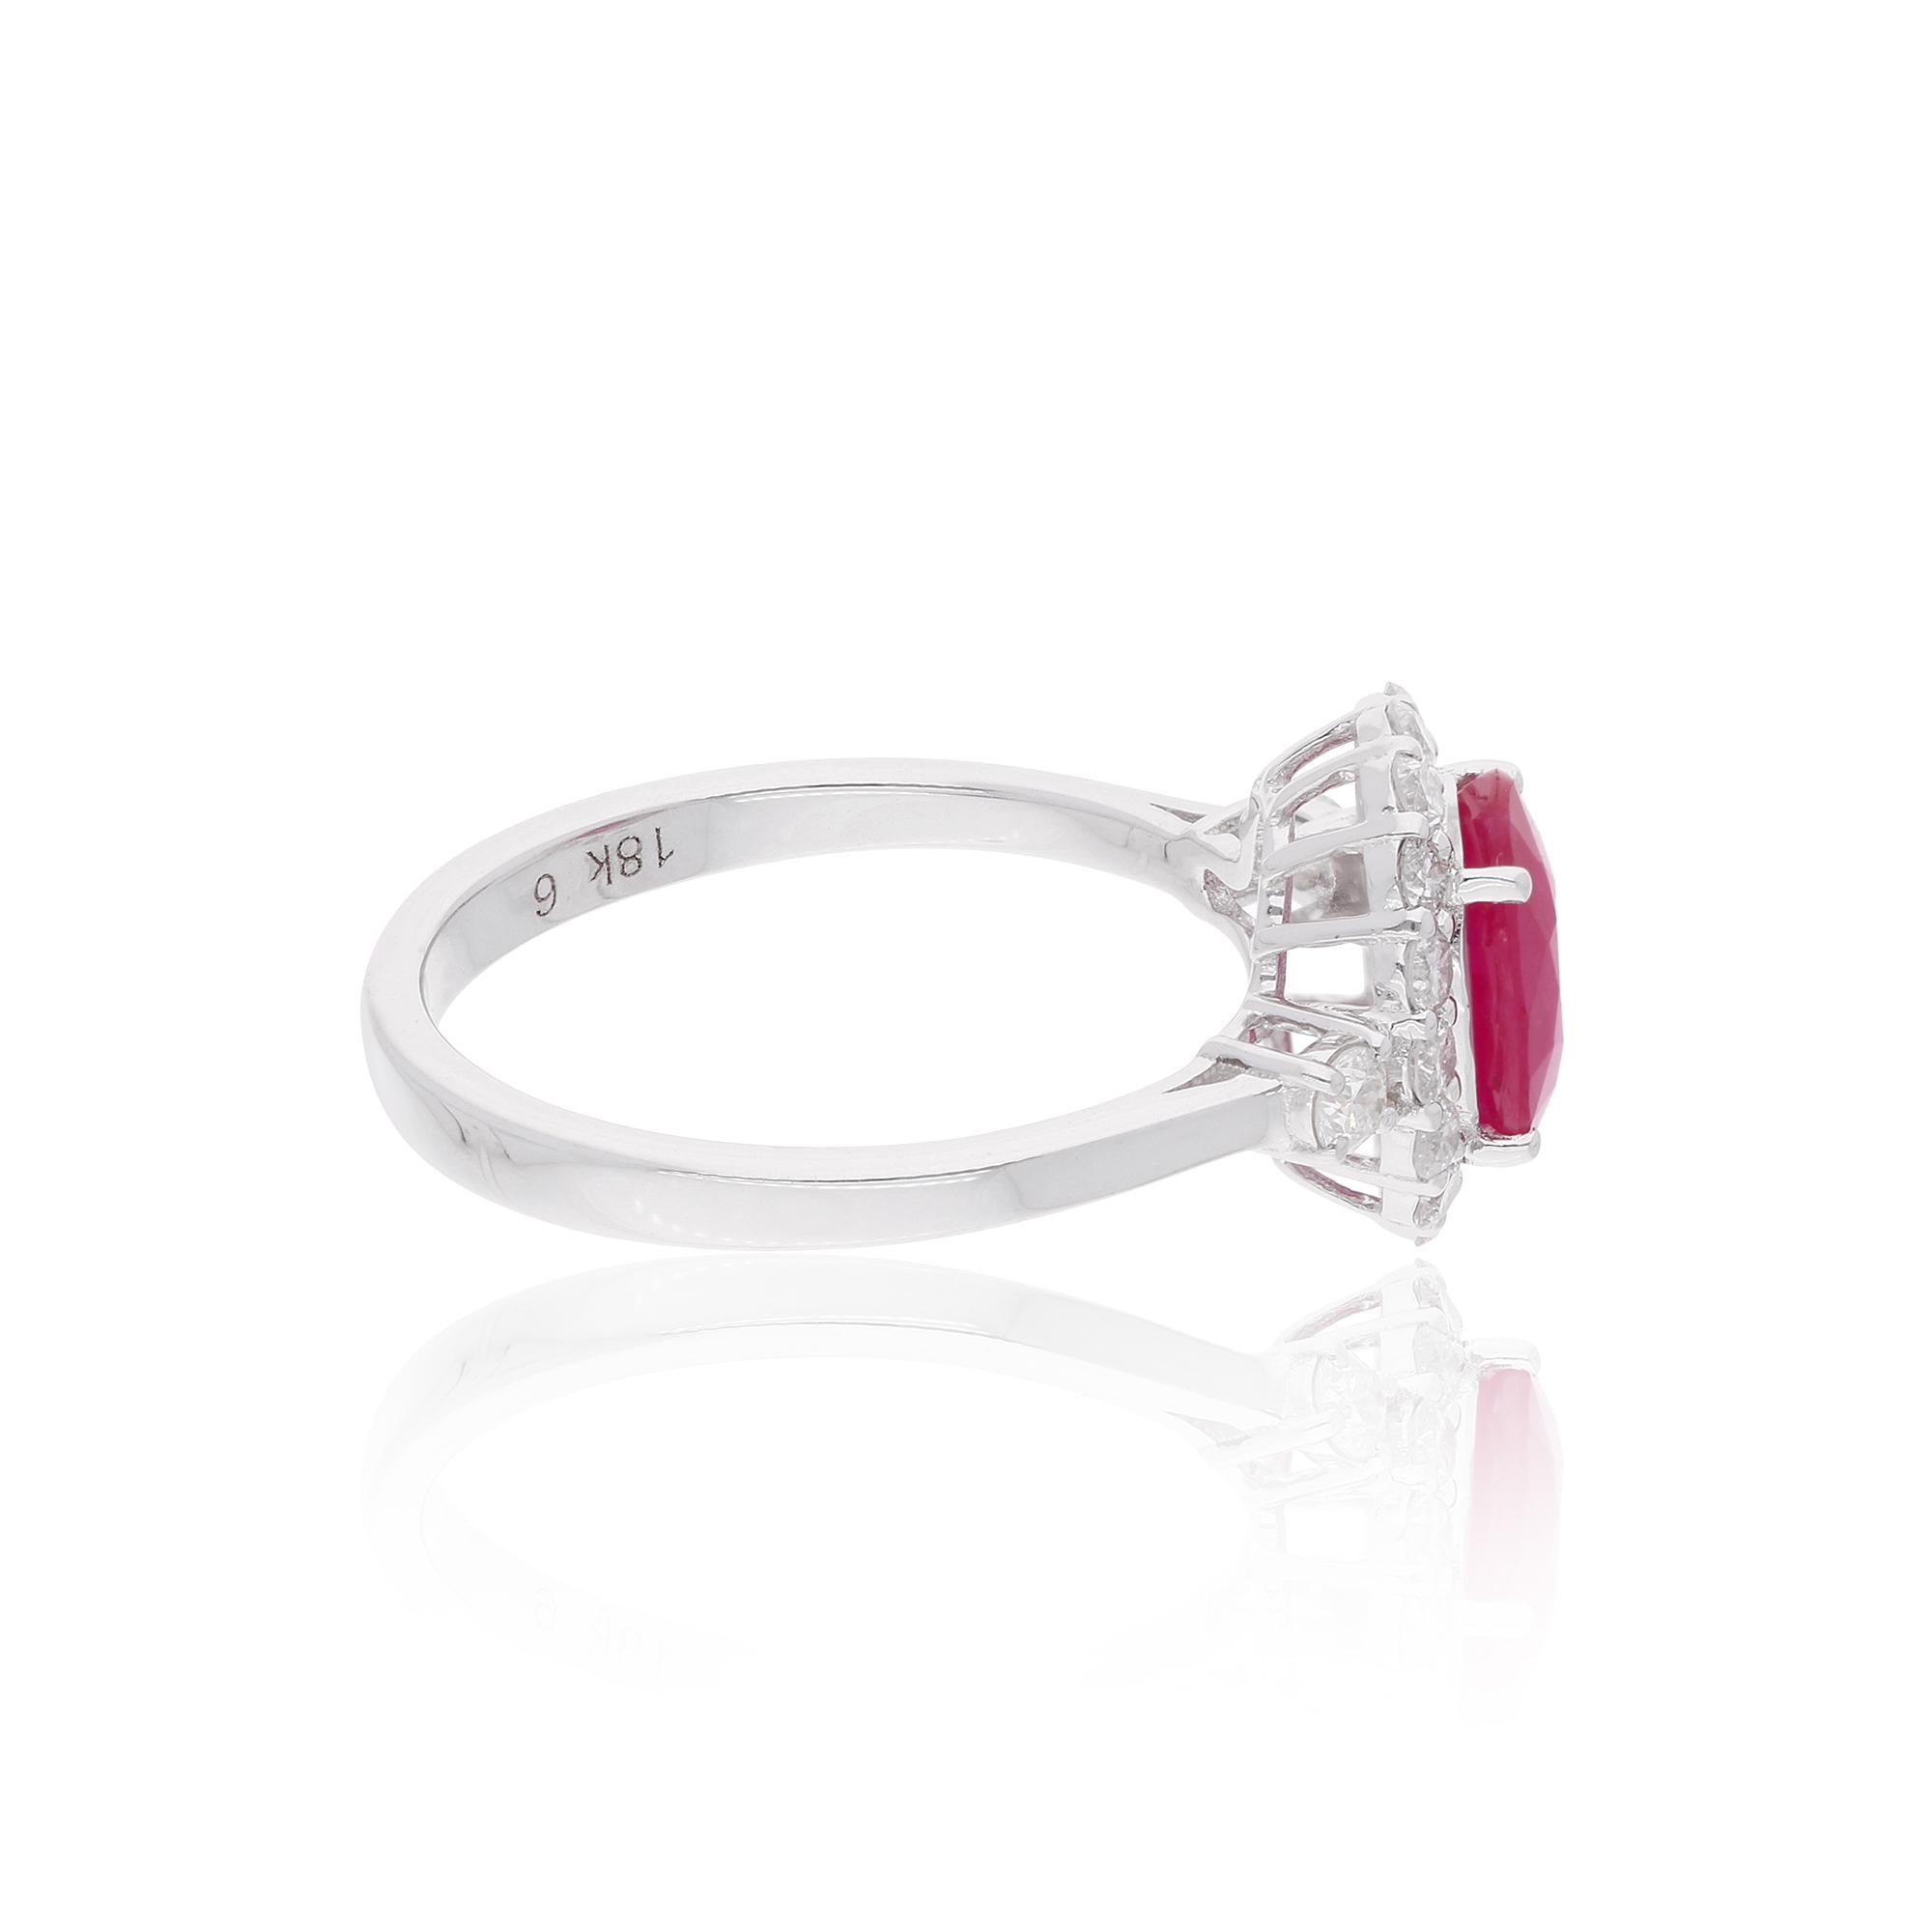 Oval Cut Oval Shape Ruby Gemstone Cocktail Ring Diamond 18 Karat White Gold Fine Jewelry For Sale